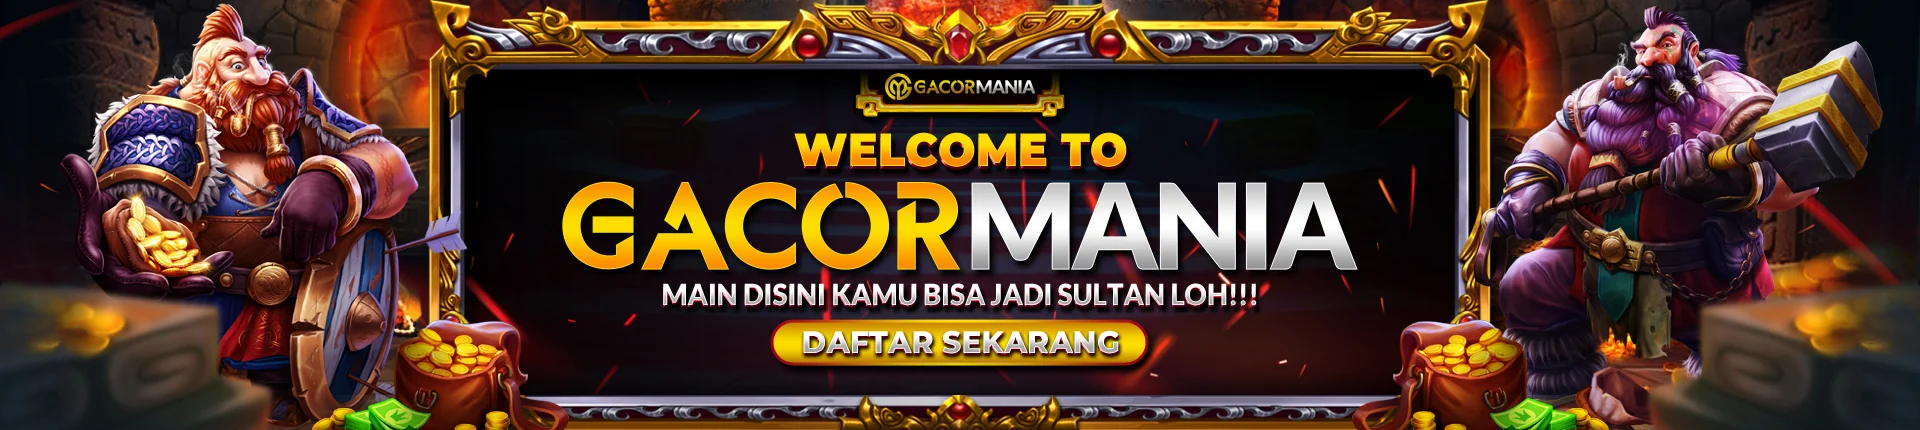 WELCOME TO Gacormania